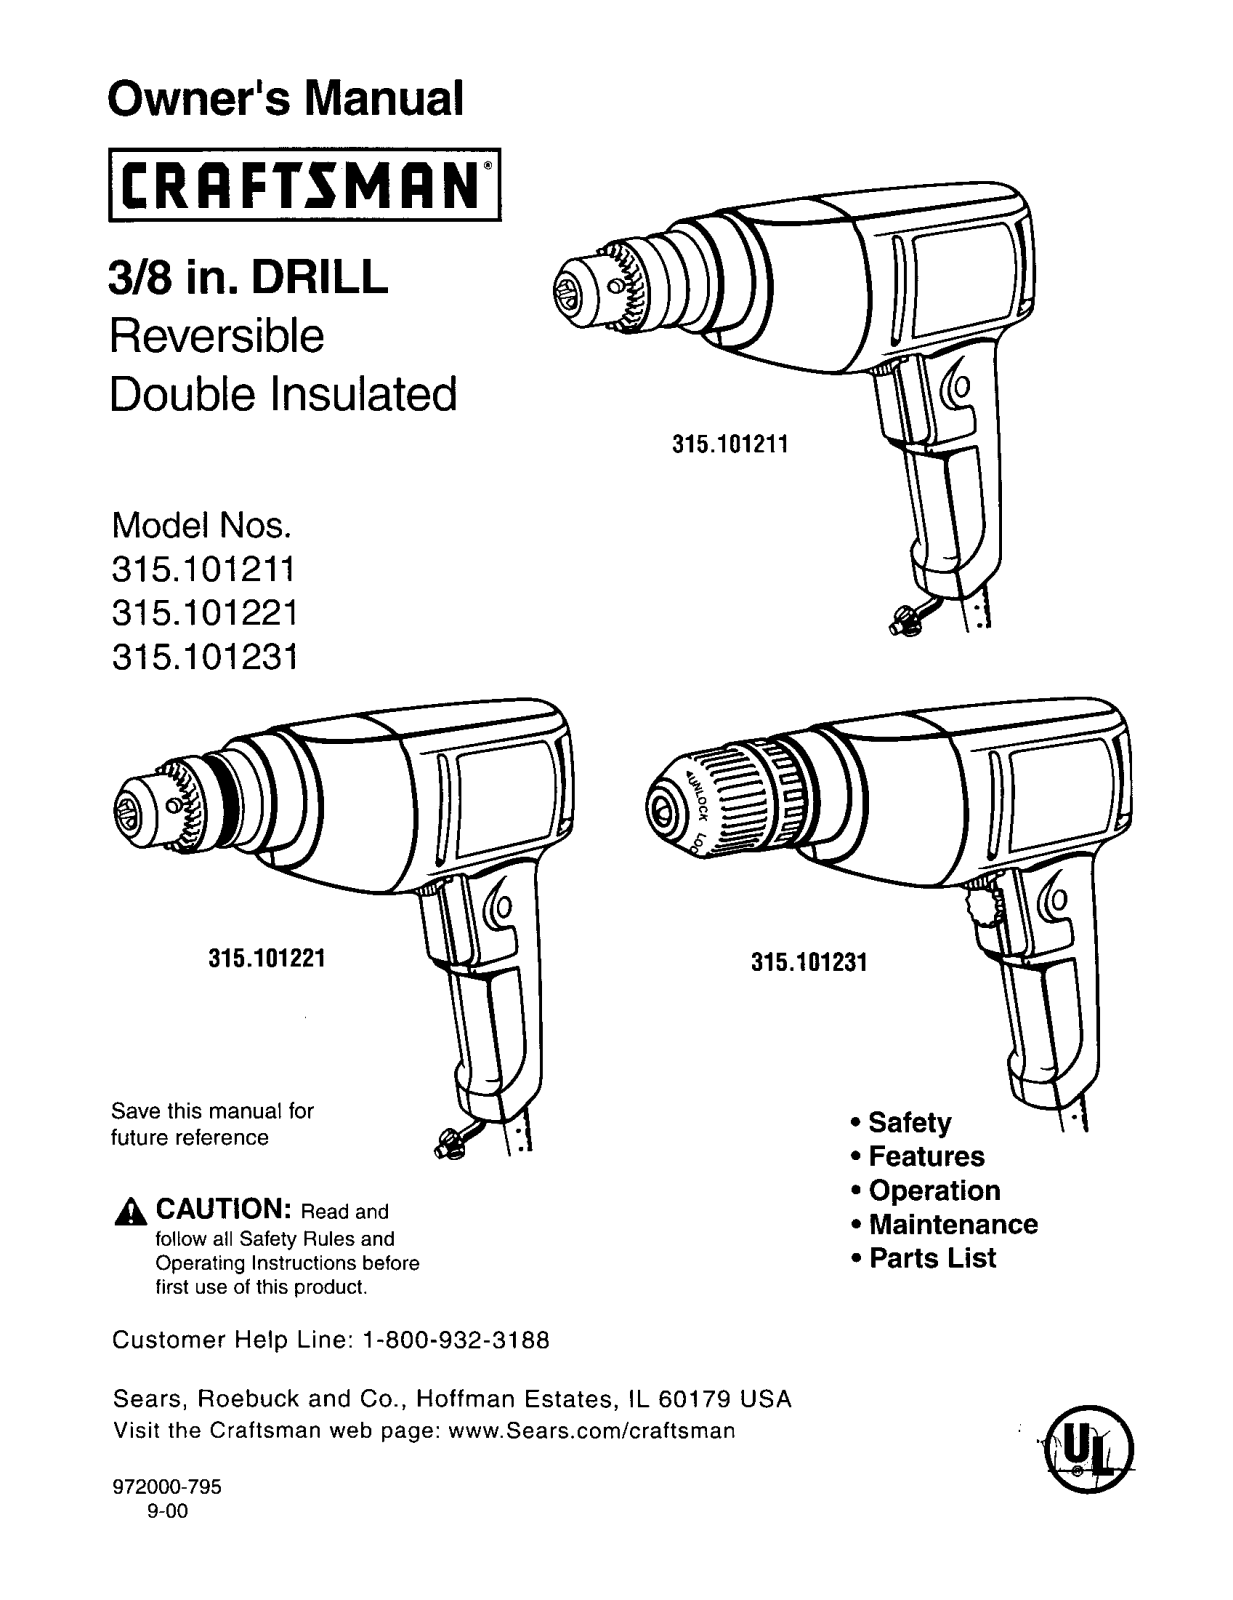 Craftsman 315101231, 315101211, 315101221 Owner’s Manual